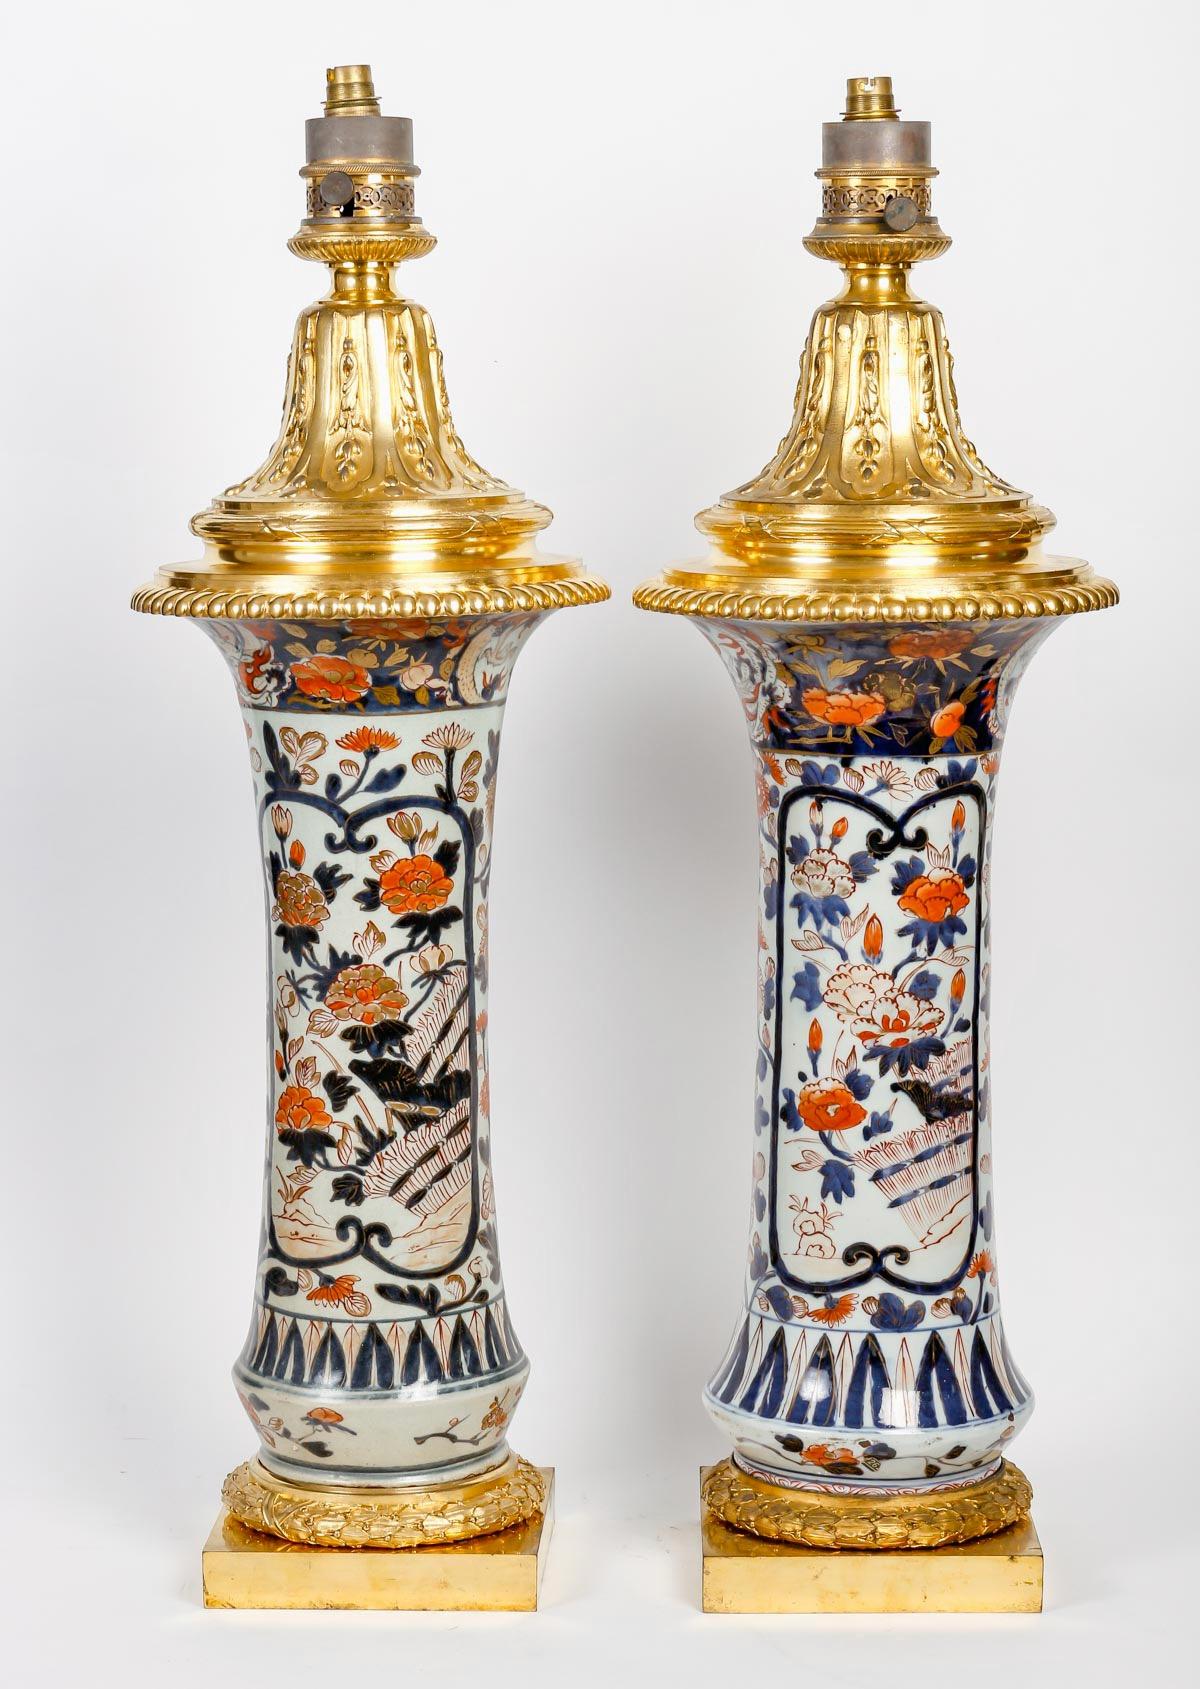 Japonisme Pair of Porcelain Vases Ormolu-Mounted in Lamps by Gagneau Paris  XIXth Century For Sale